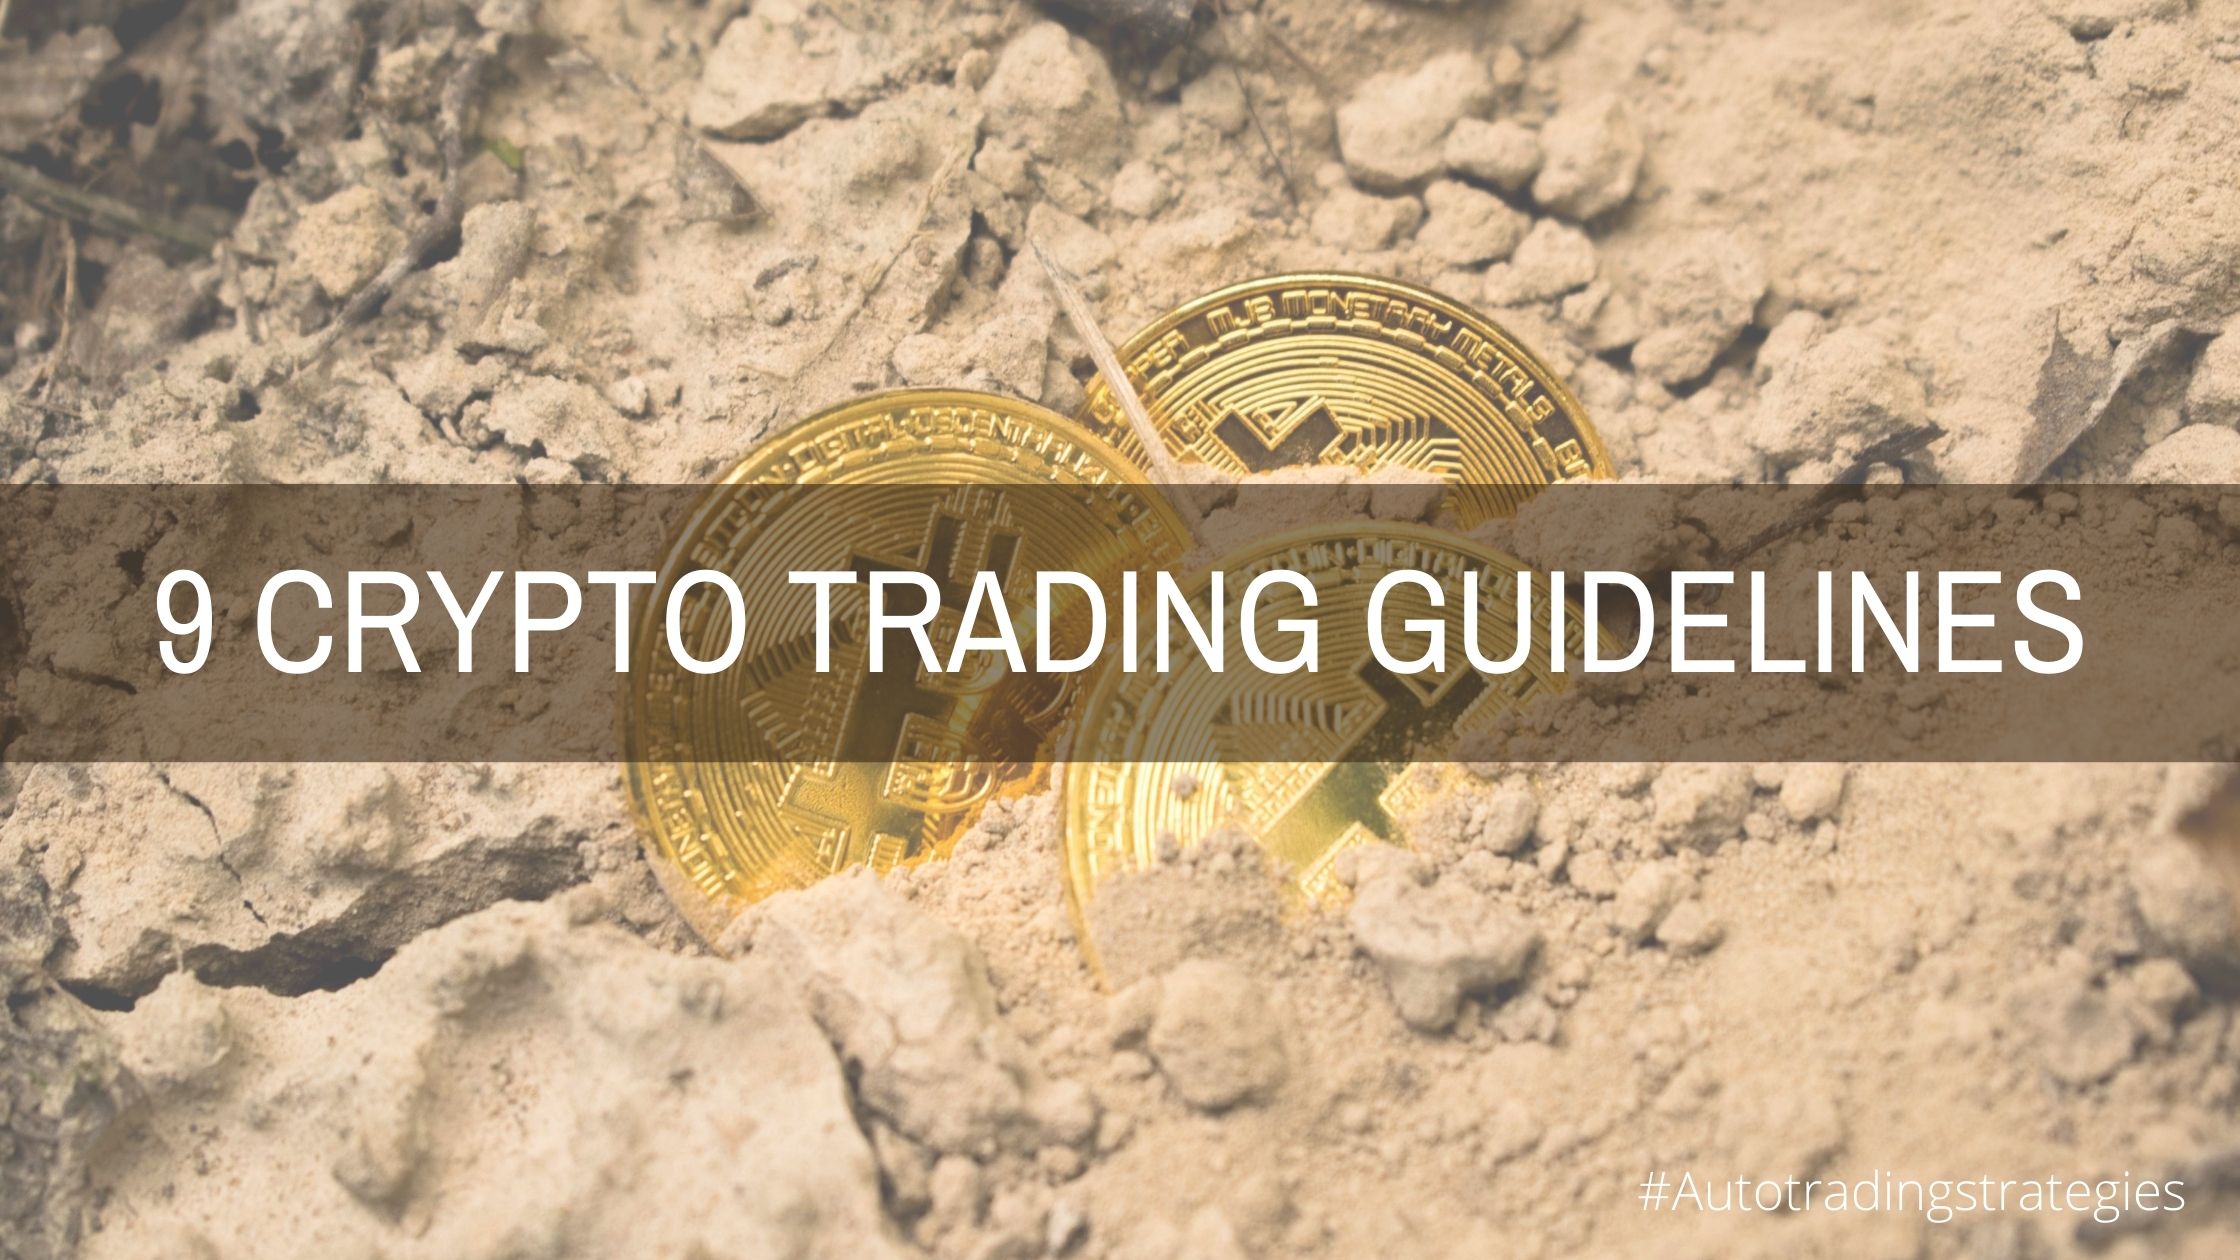 Crypto traders